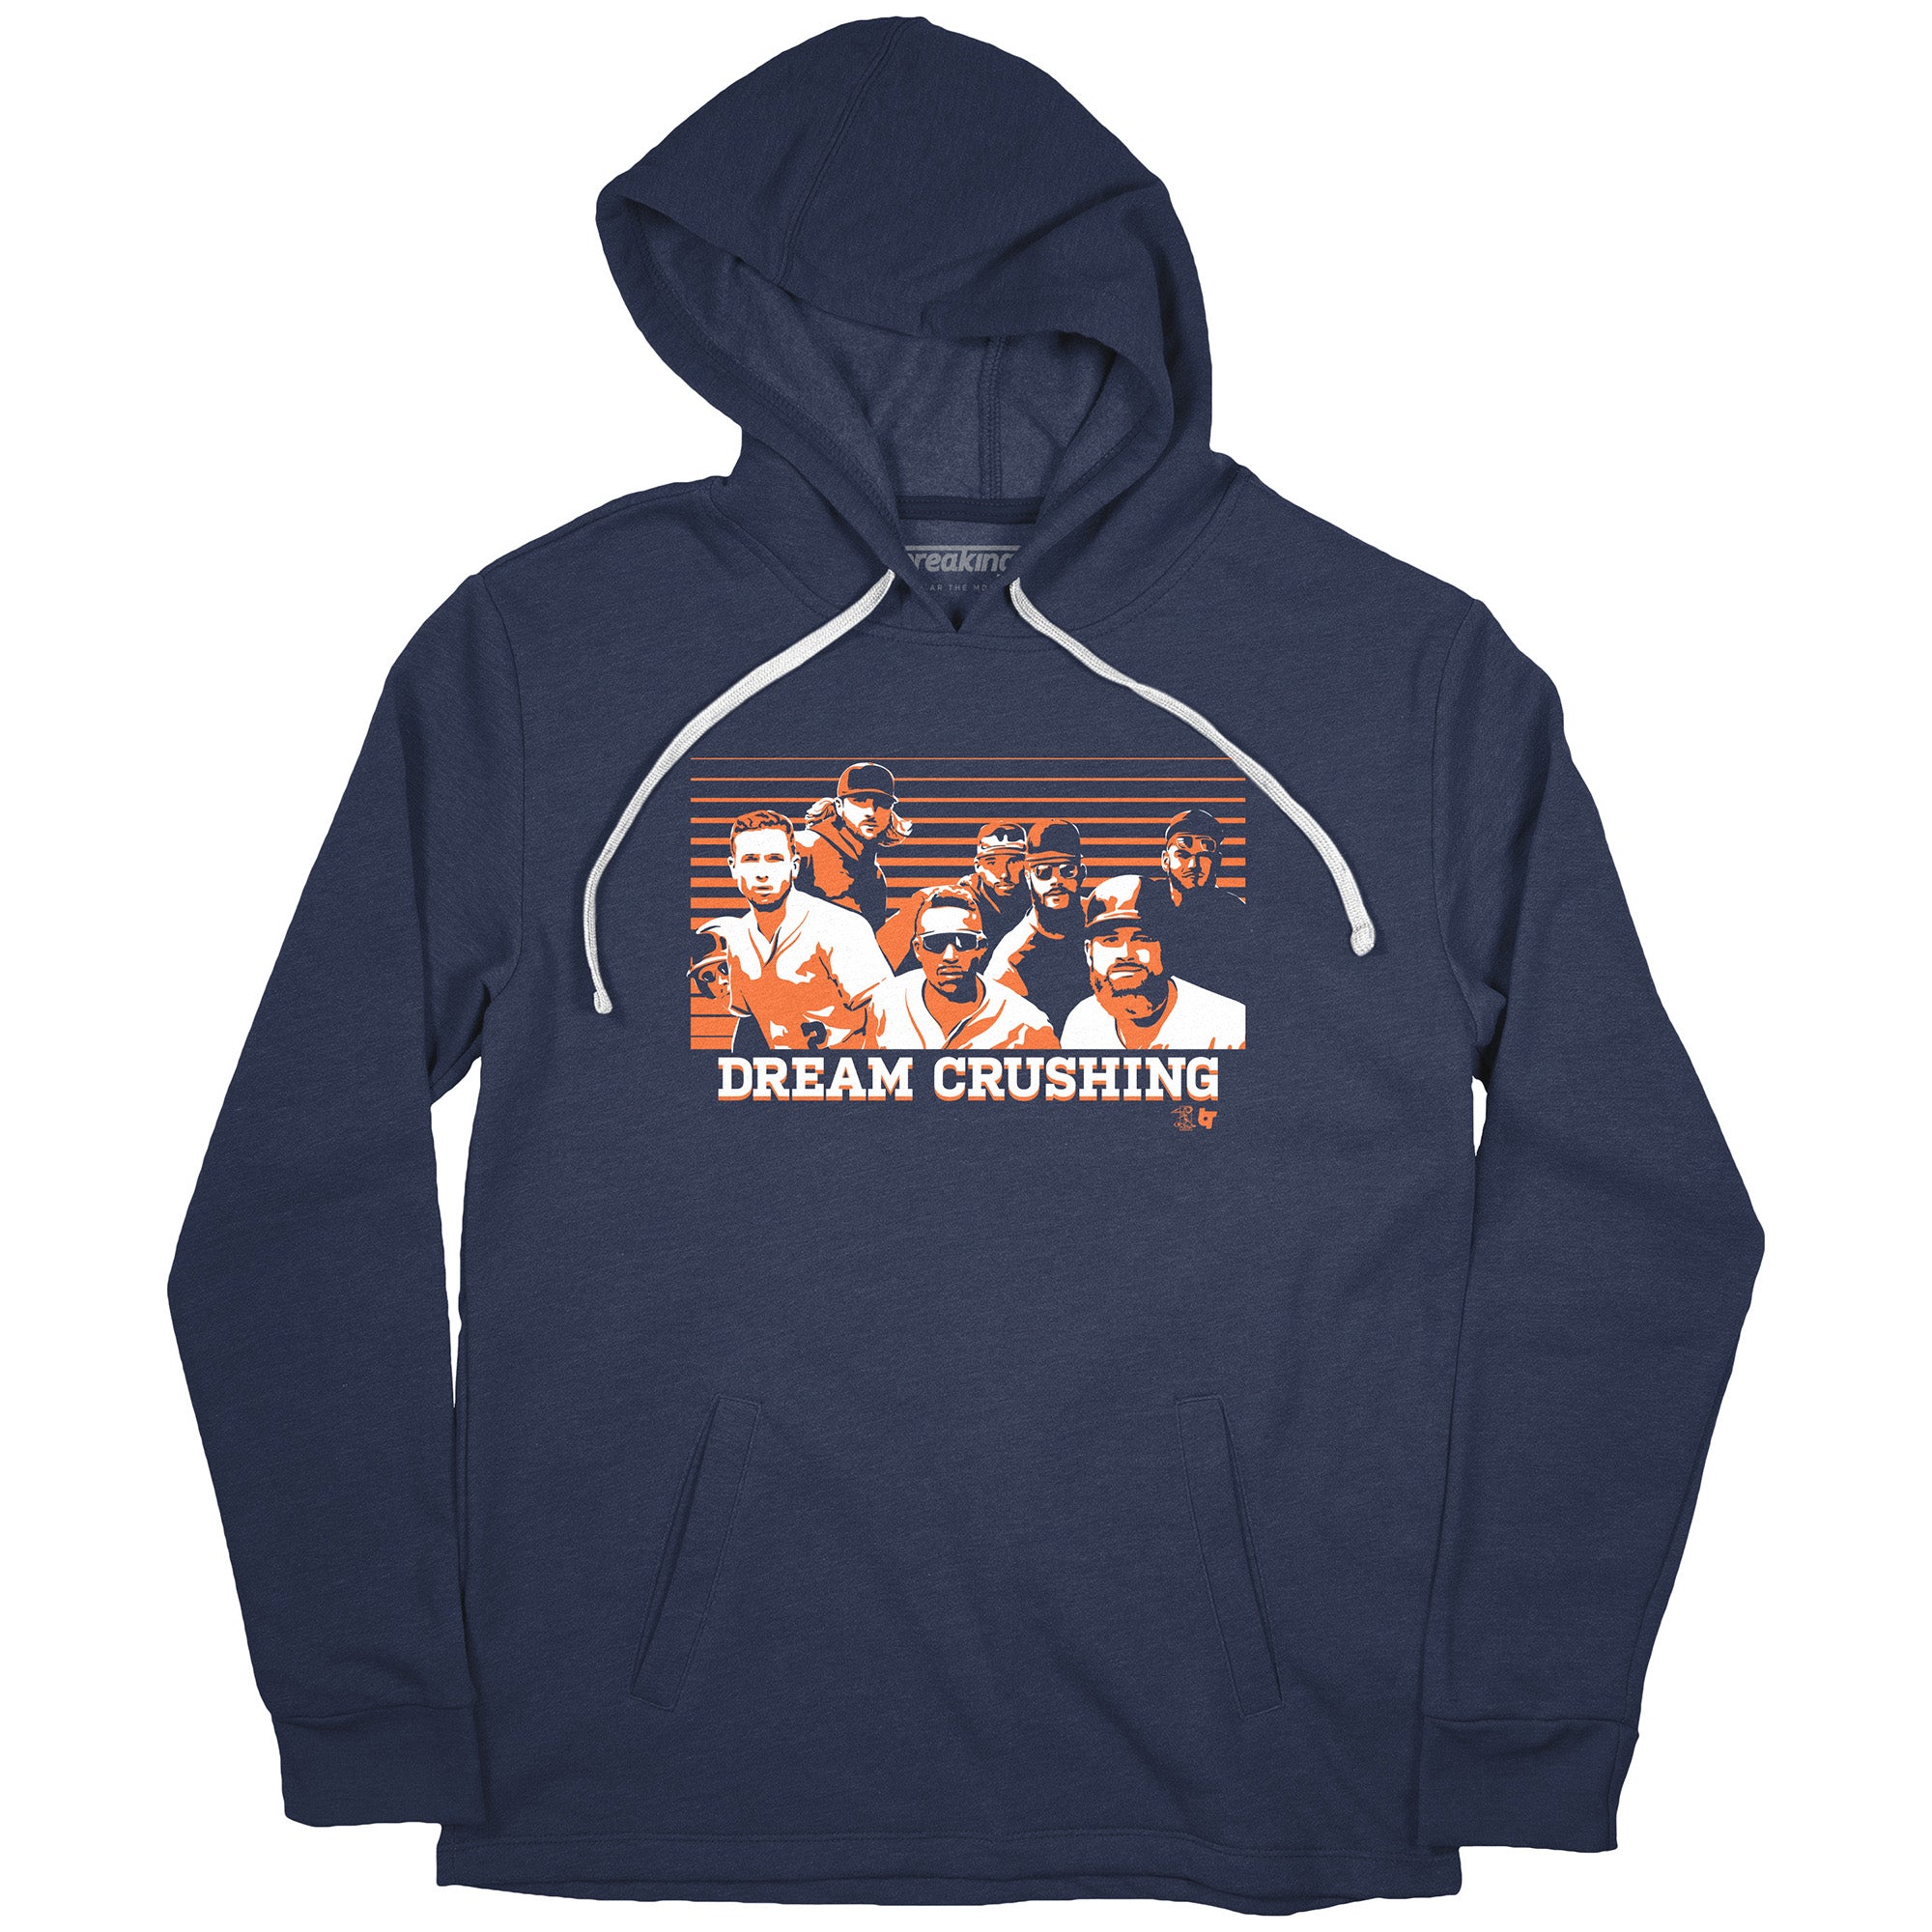 Alex Bregman Favorite Baseball Player Fan Shirt, hoodie, sweater